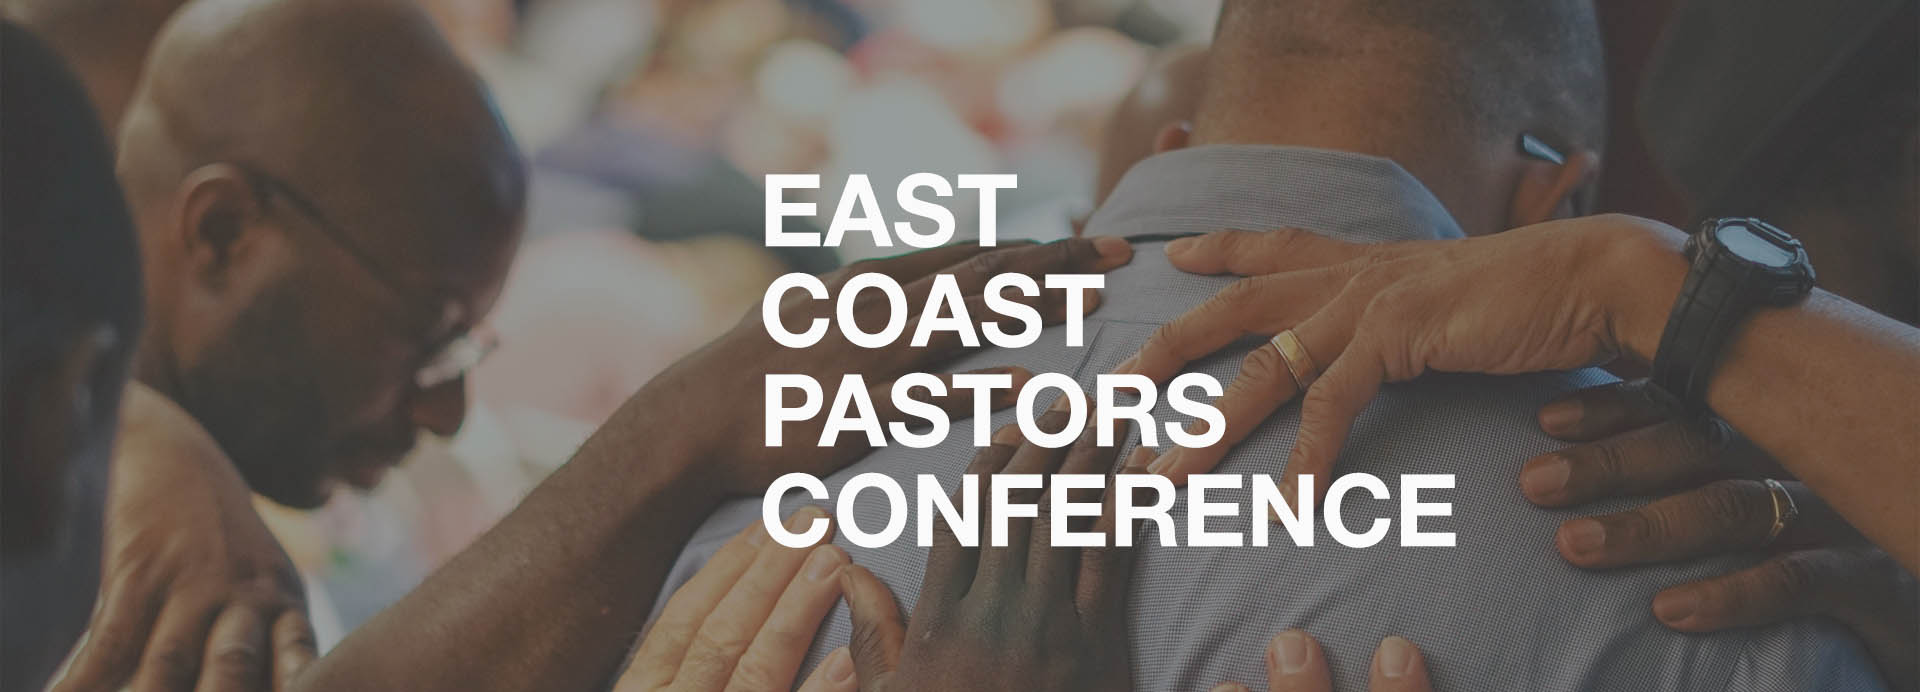 East Coast Pastors Conference